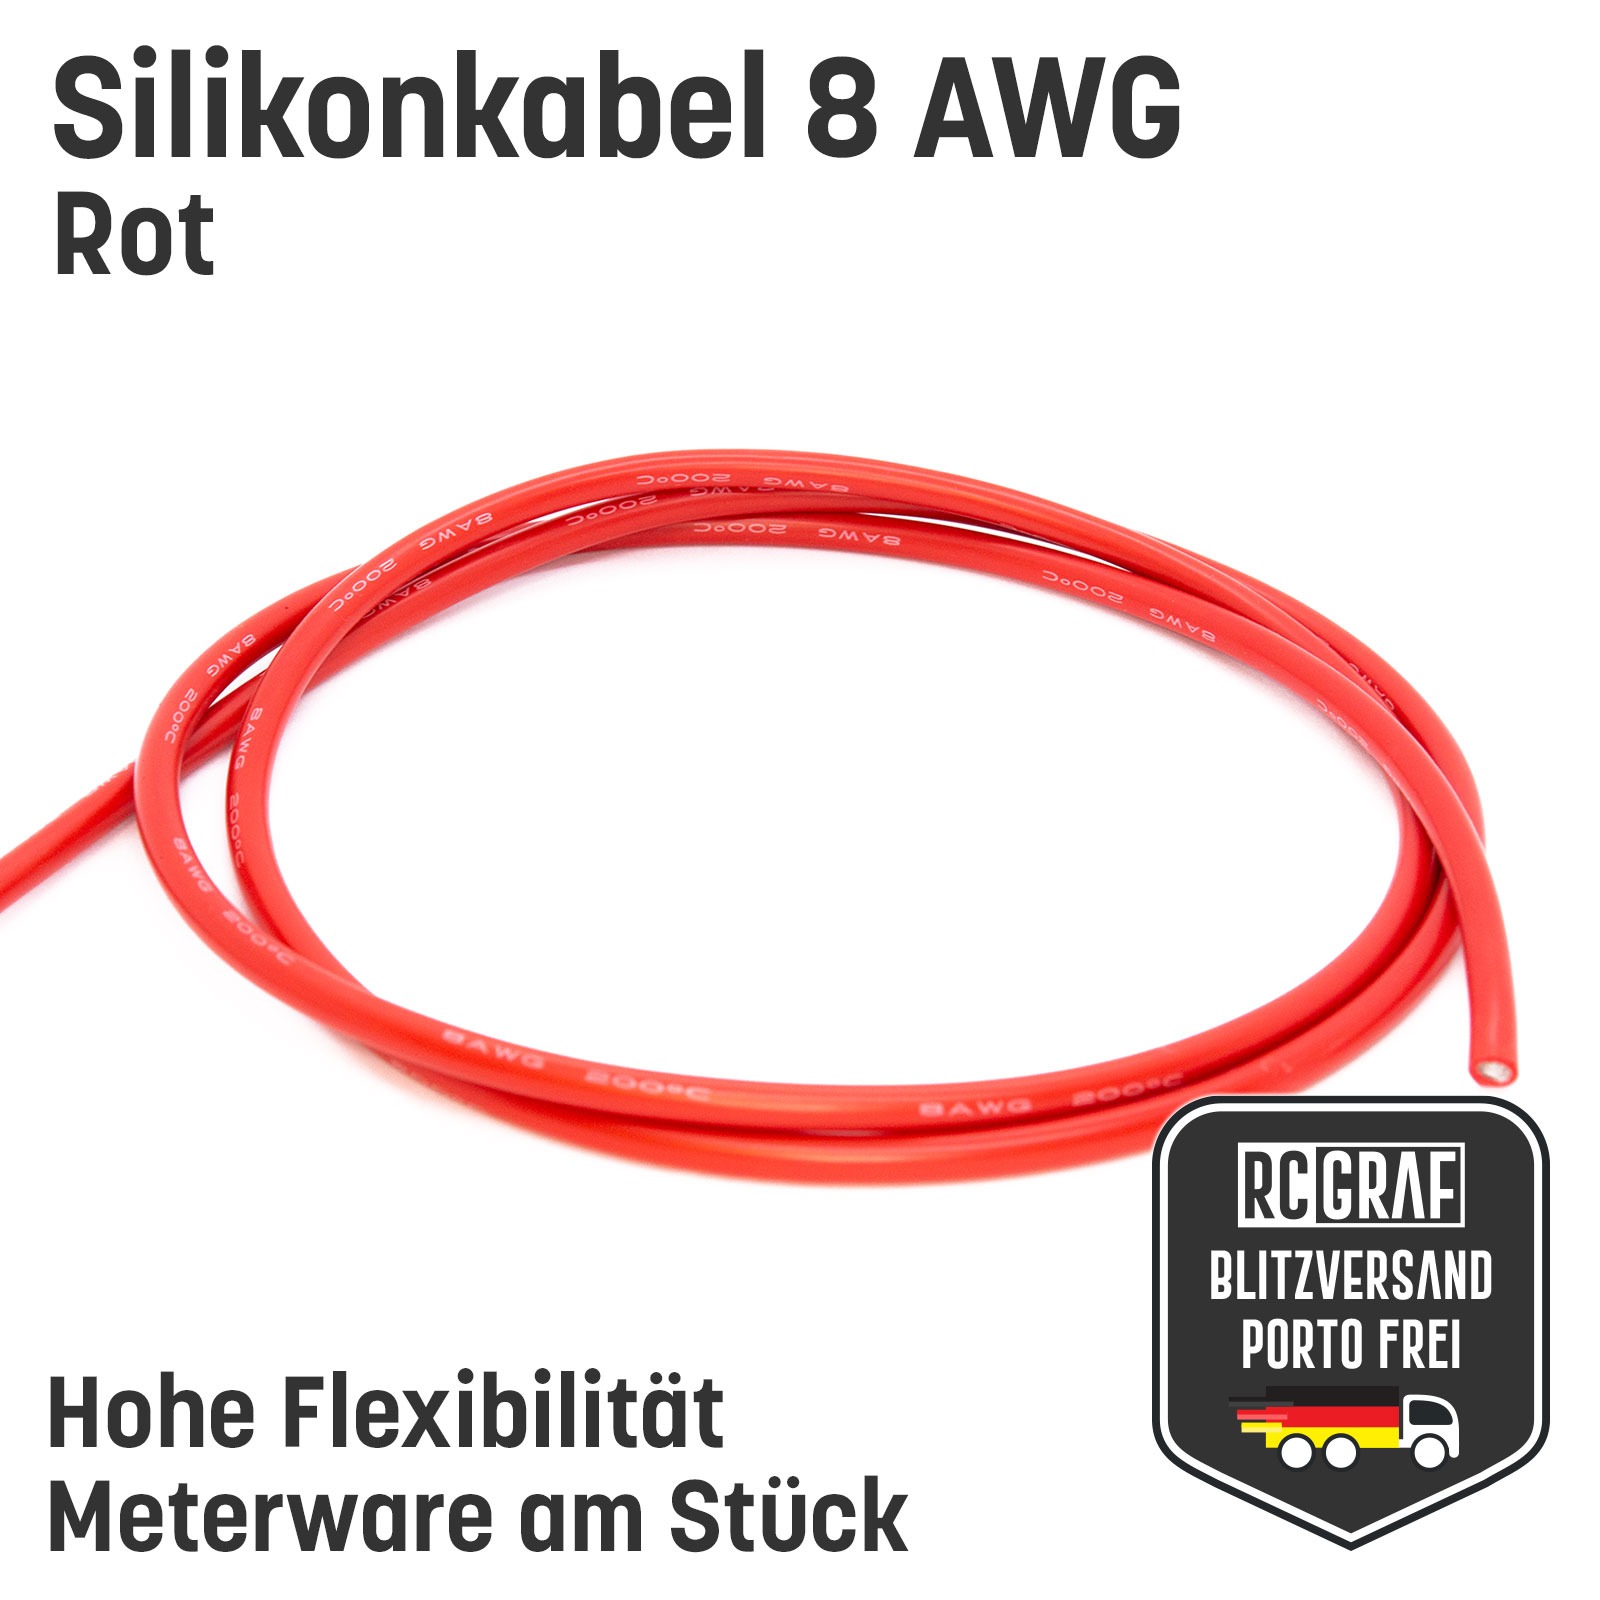 Silikonkabel 8 AWG hochflexibel Rot Schwarz Kupfer RC Kabel 2